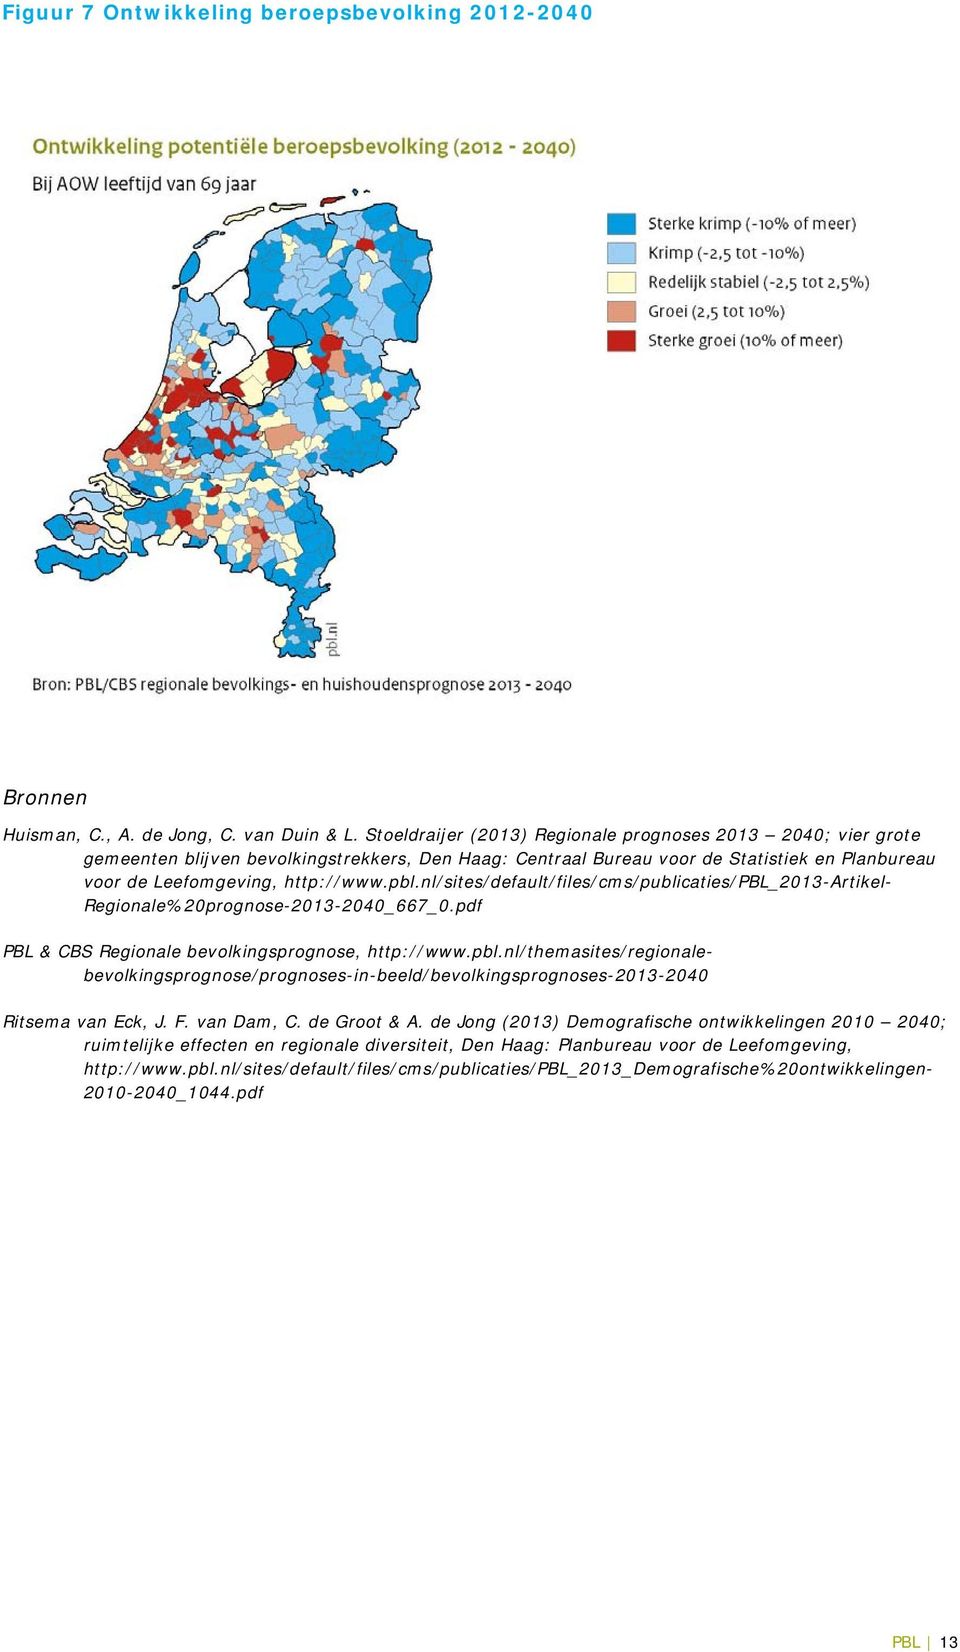 nl/sites/default/files/cms/publicaties/pbl_2013-artikel- Regionale%20prognose-2013-2040_667_0.pdf PBL & CBS Regionale bevolkingsprognose, http://www.pbl.nl/themasites/regionalebevolkingsprognose/prognoses-in-beeld/bevolkingsprognoses-2013-2040 Ritsema van Eck, J.